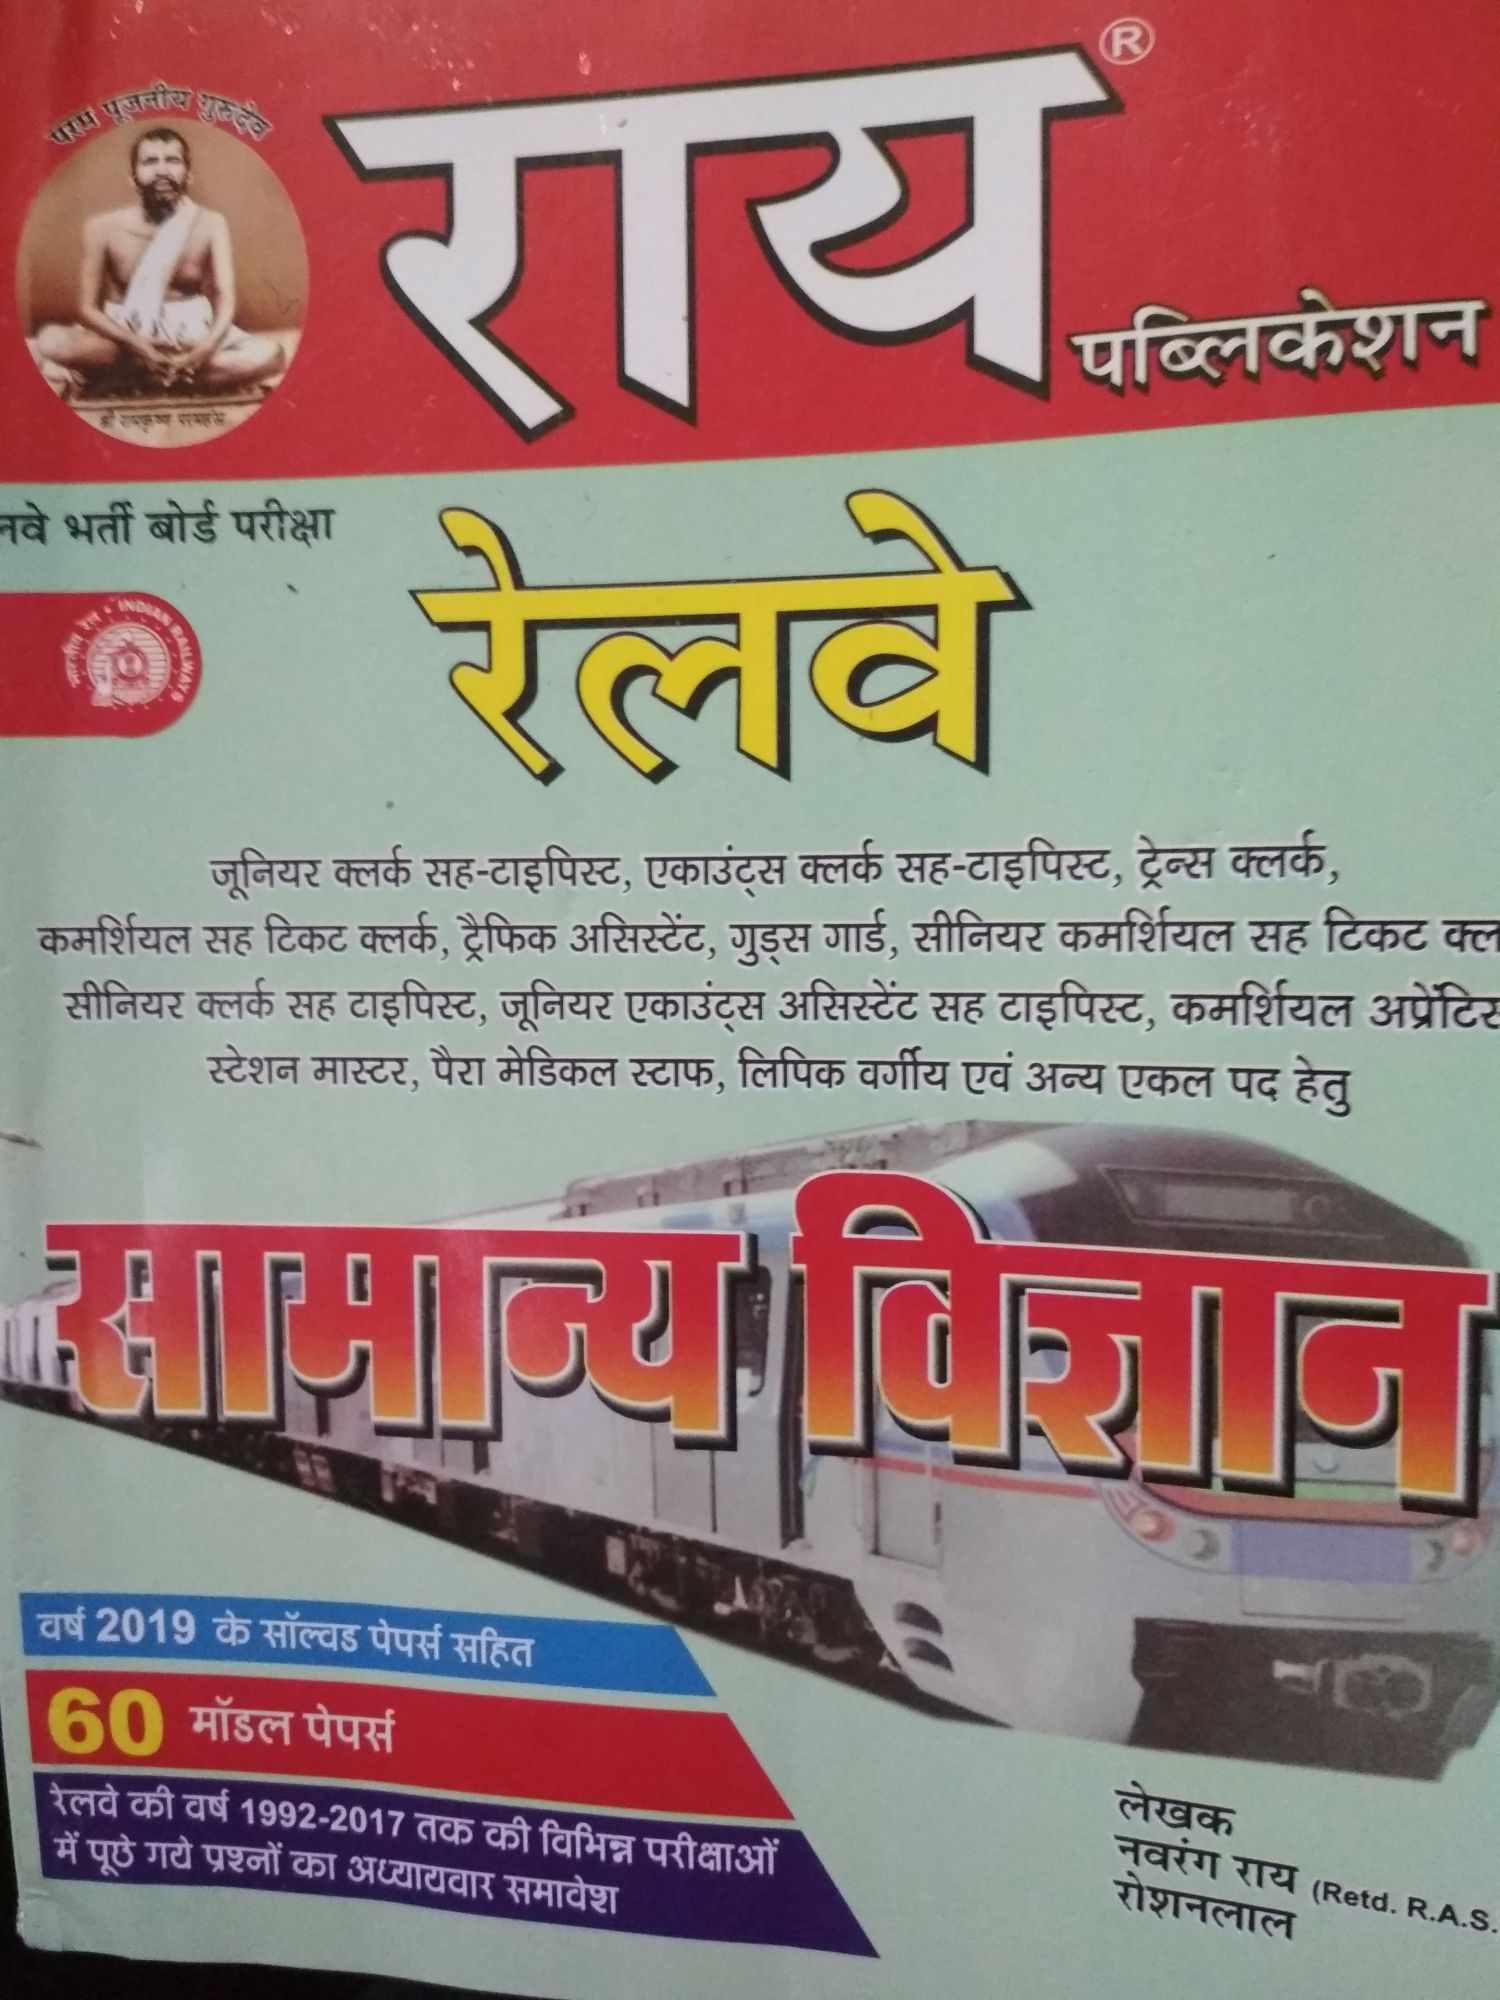 Rrb Railway General Science Book By Rai Publication  in hindi medium